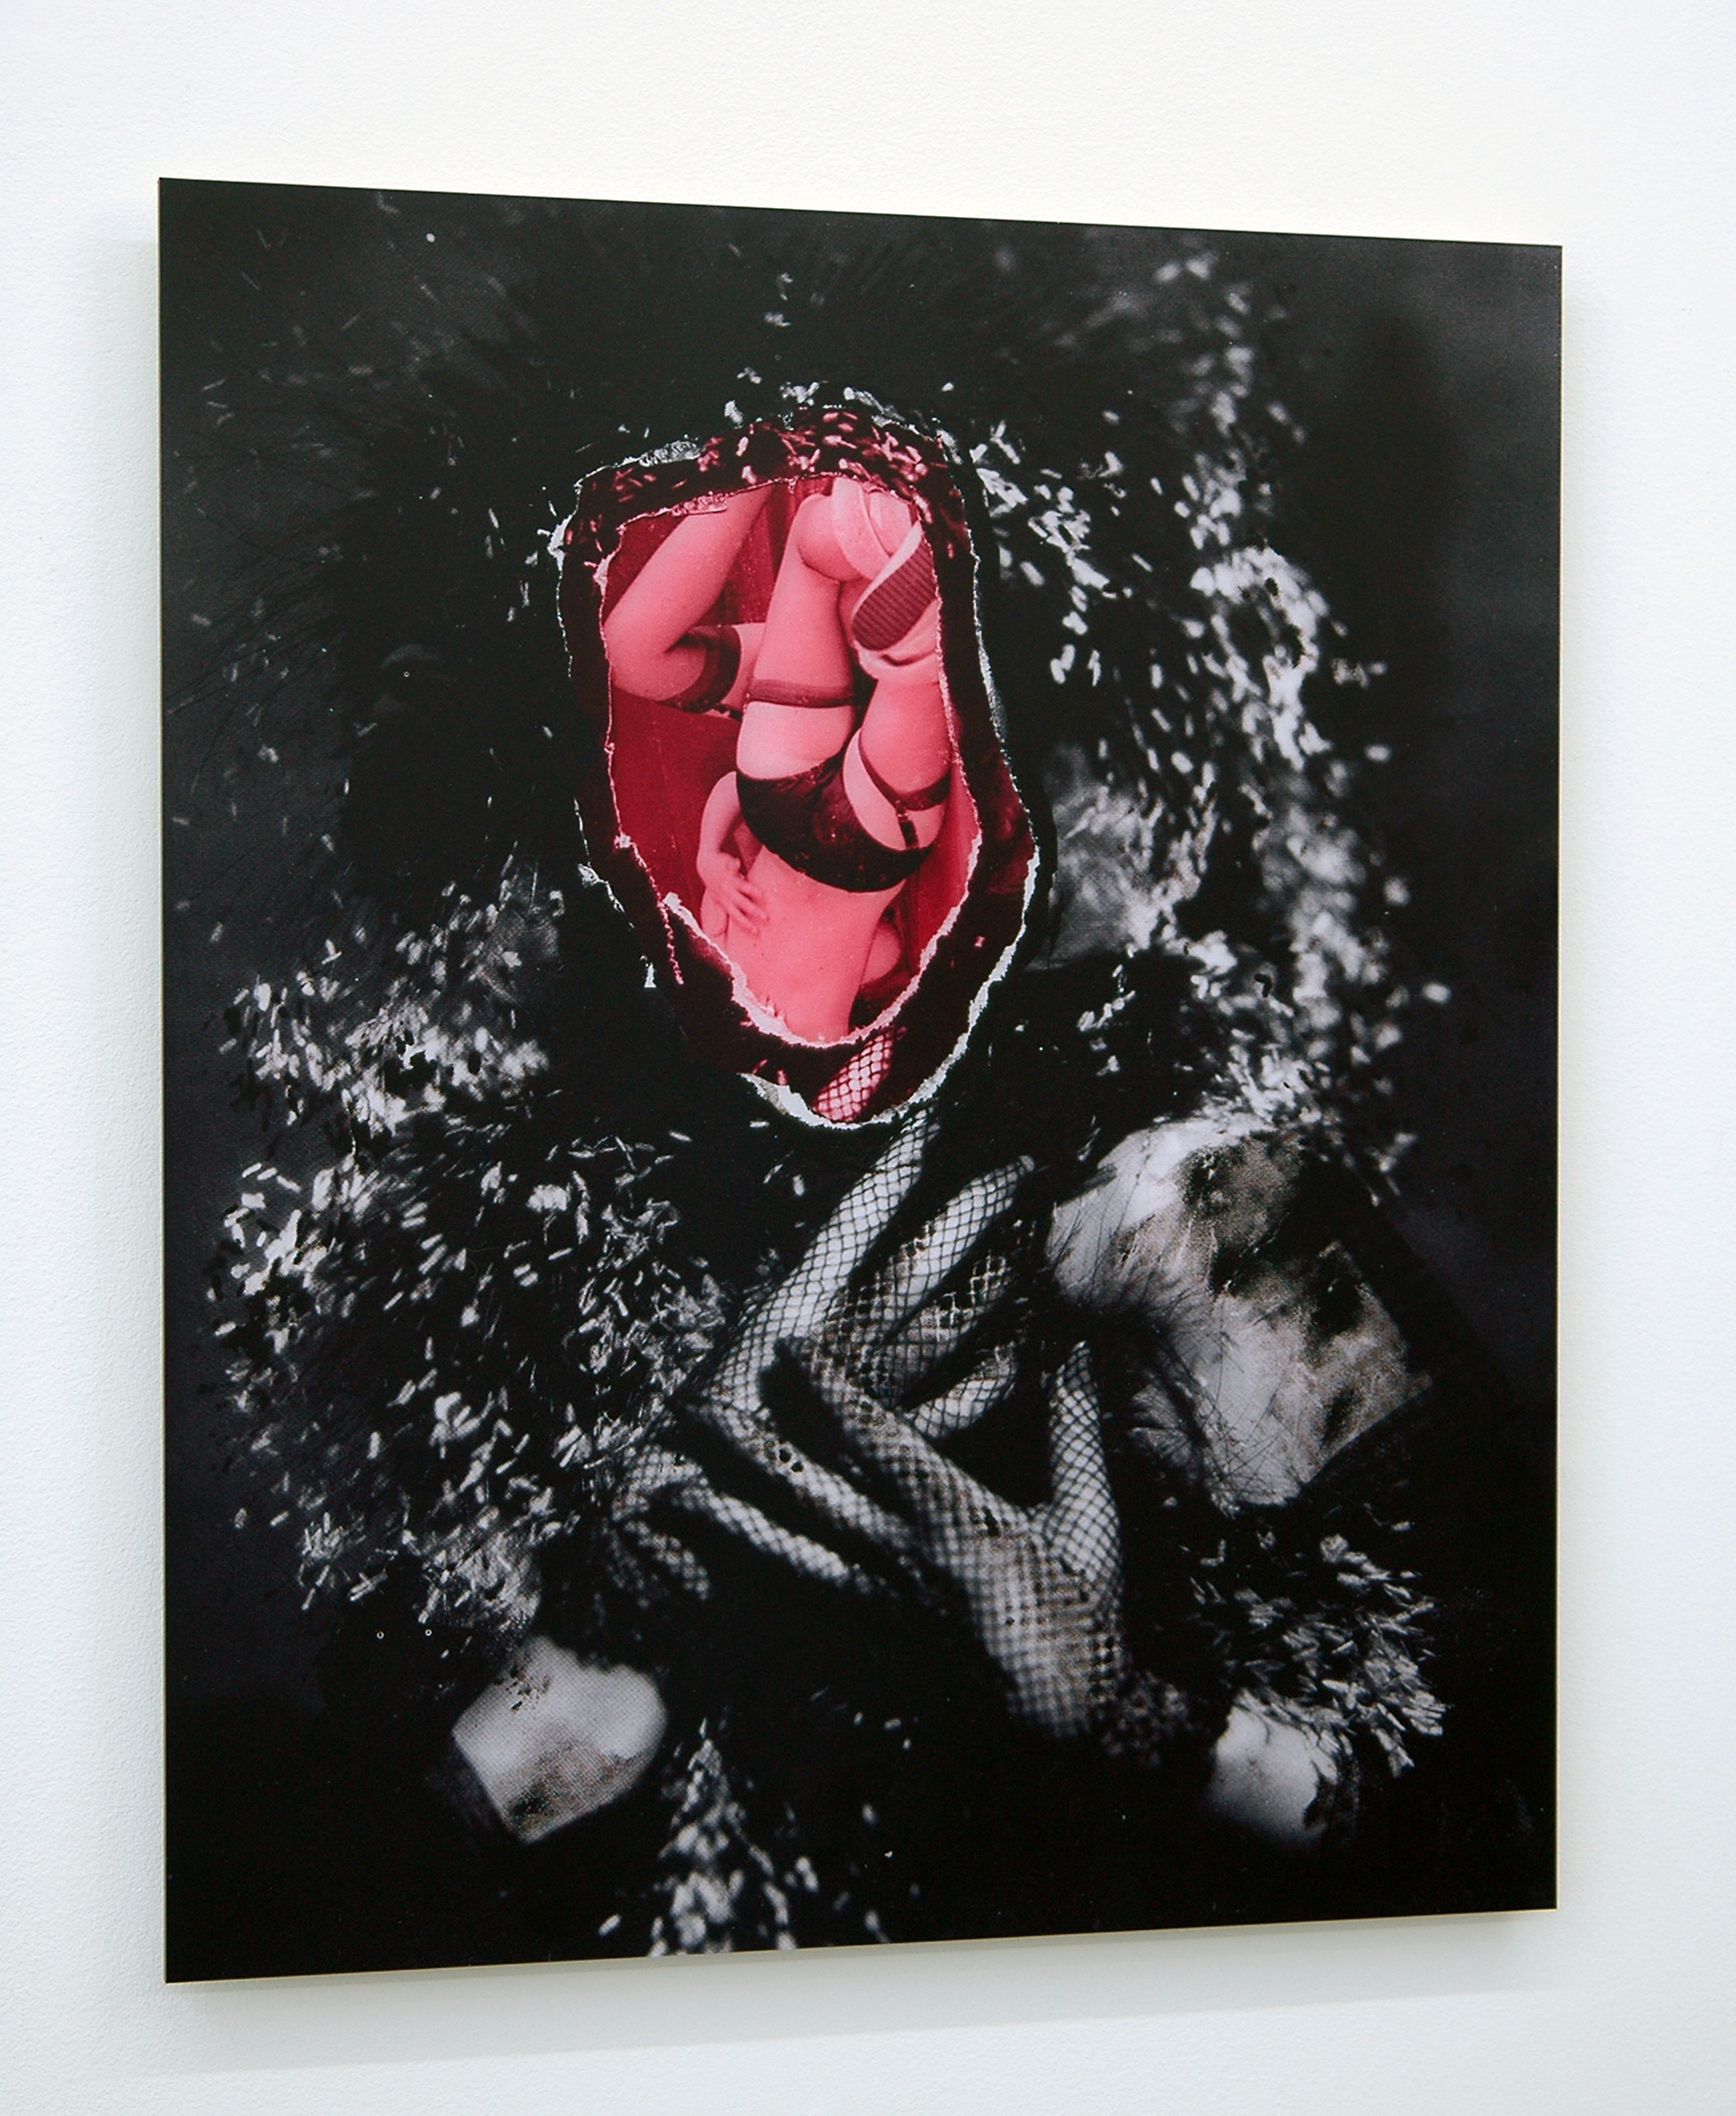   DERIC CARNER  (3/4 view) &nbsp;Here Lies the Heart,&nbsp; mounted c-print, 22" x 18", 2014 